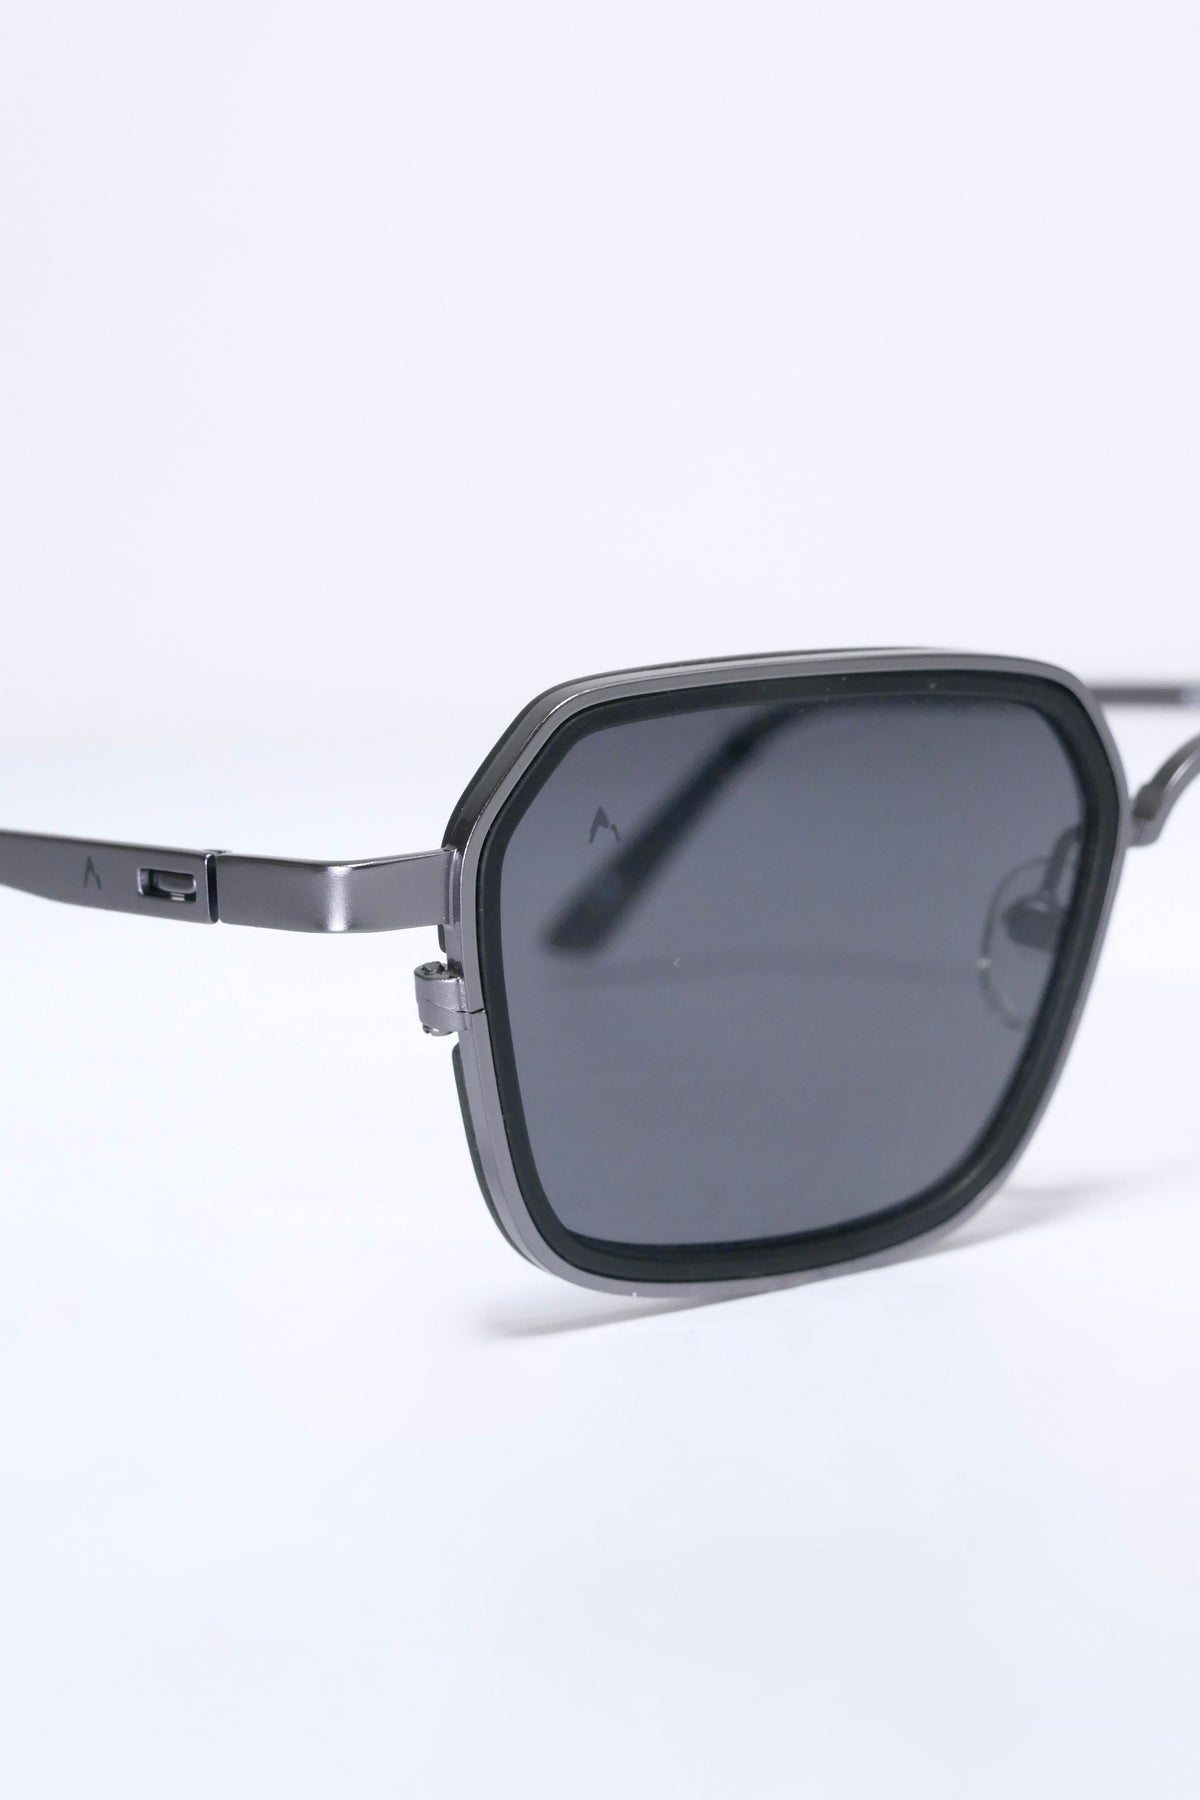 WEAREEYES Gamma X Sunglasses - Grey